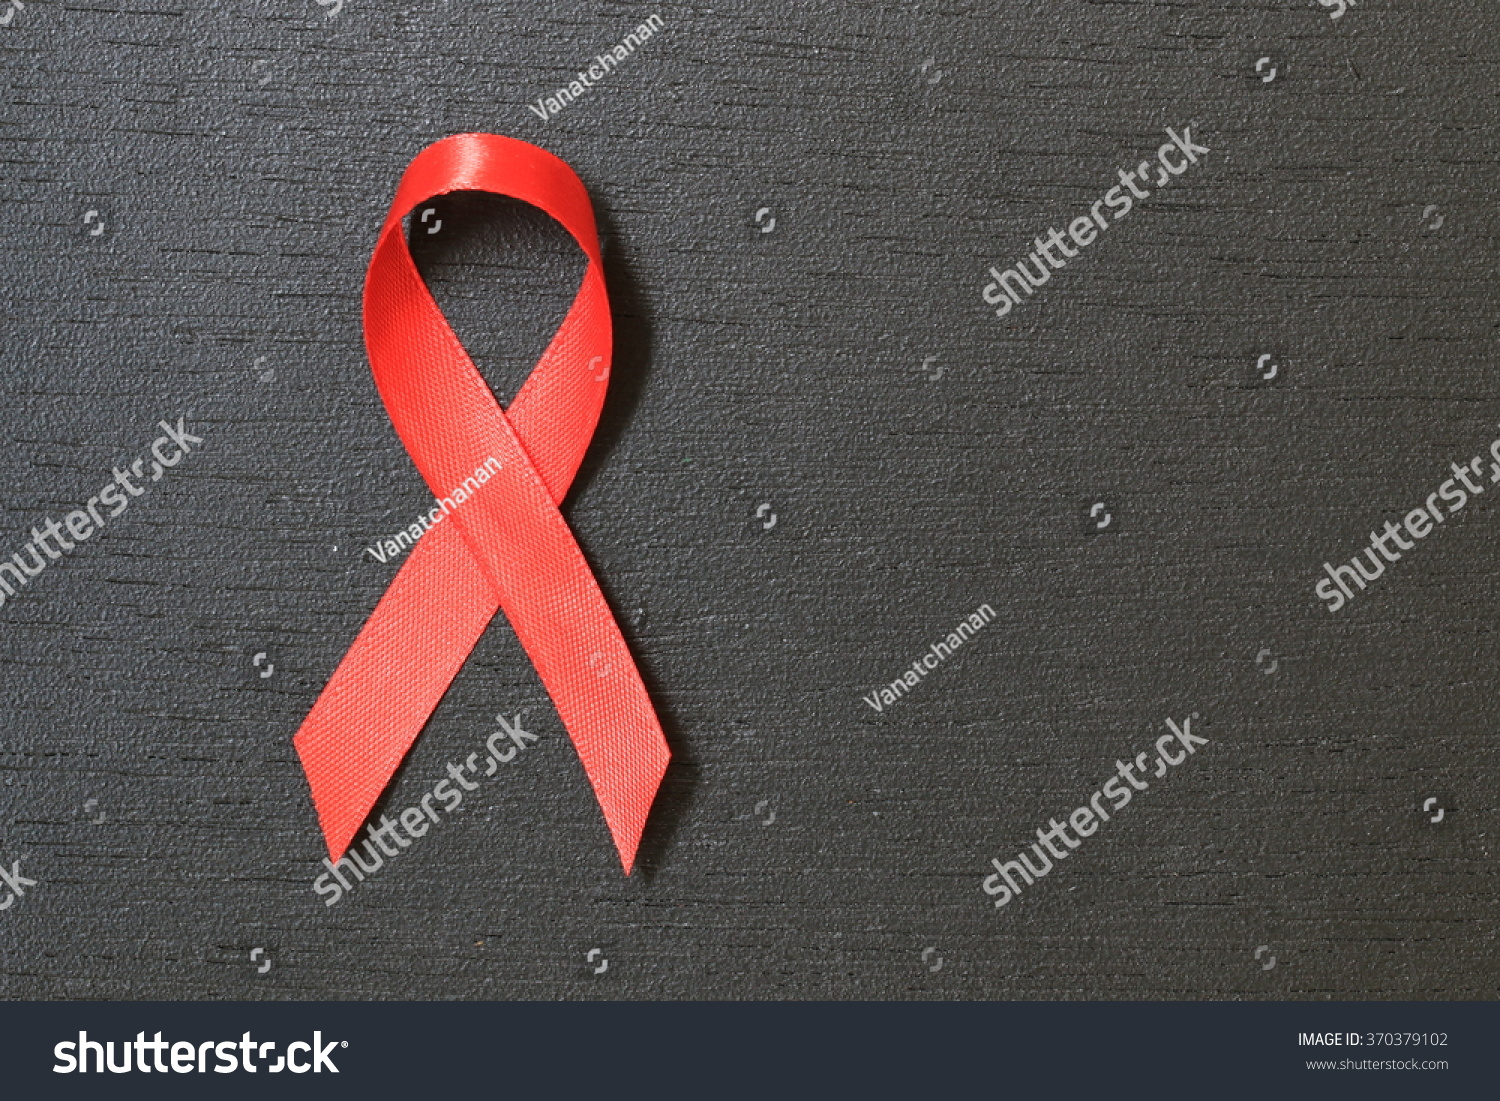 Red Ribbon Aids Awareness Stock Photo 375054682 | Shutterstock